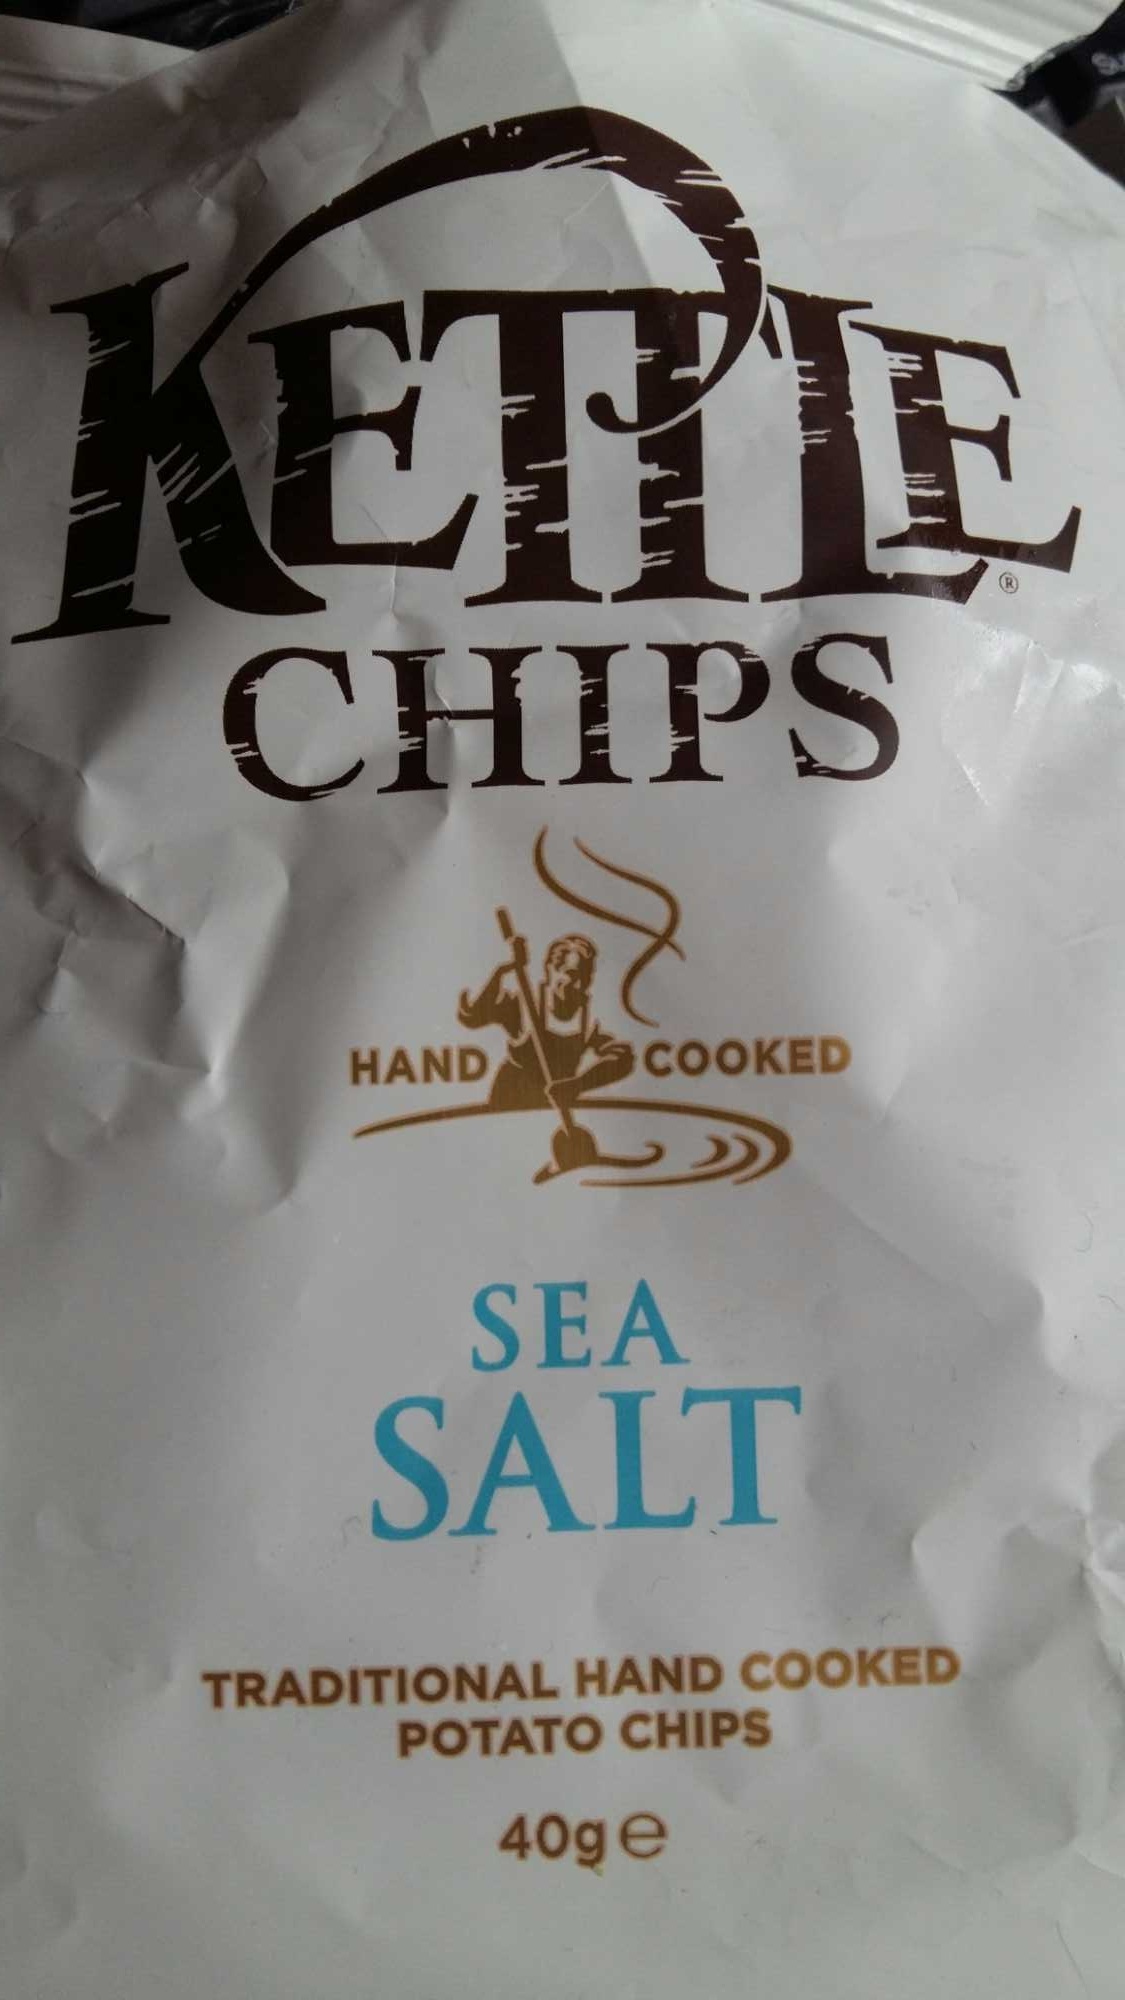 Kettle Chips Sea salt - Product - en